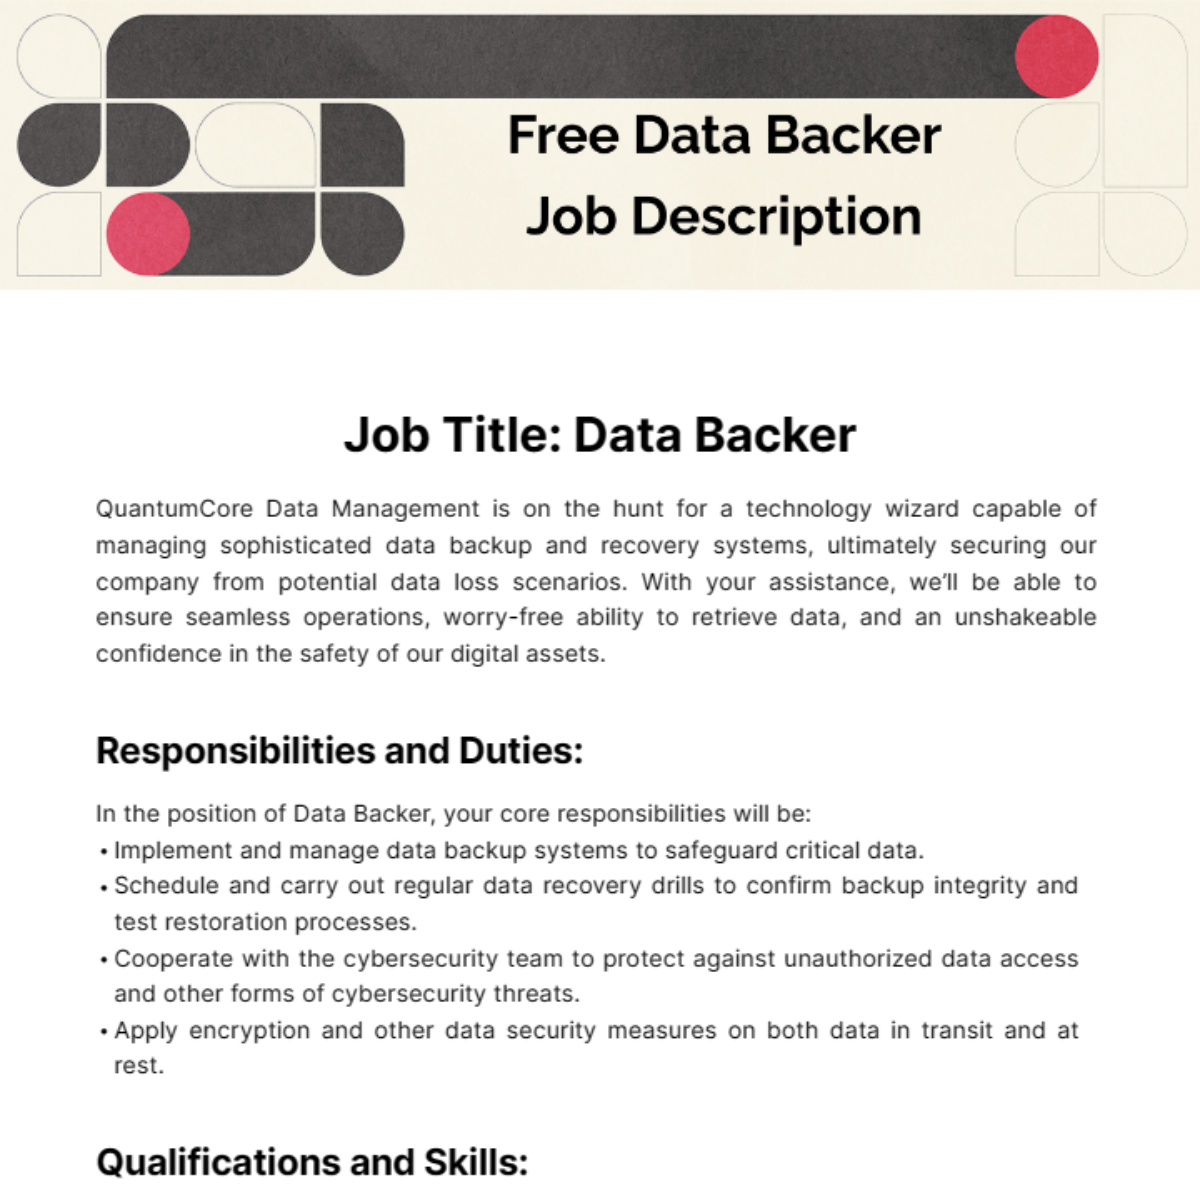 Free Data Backer Job Description Template